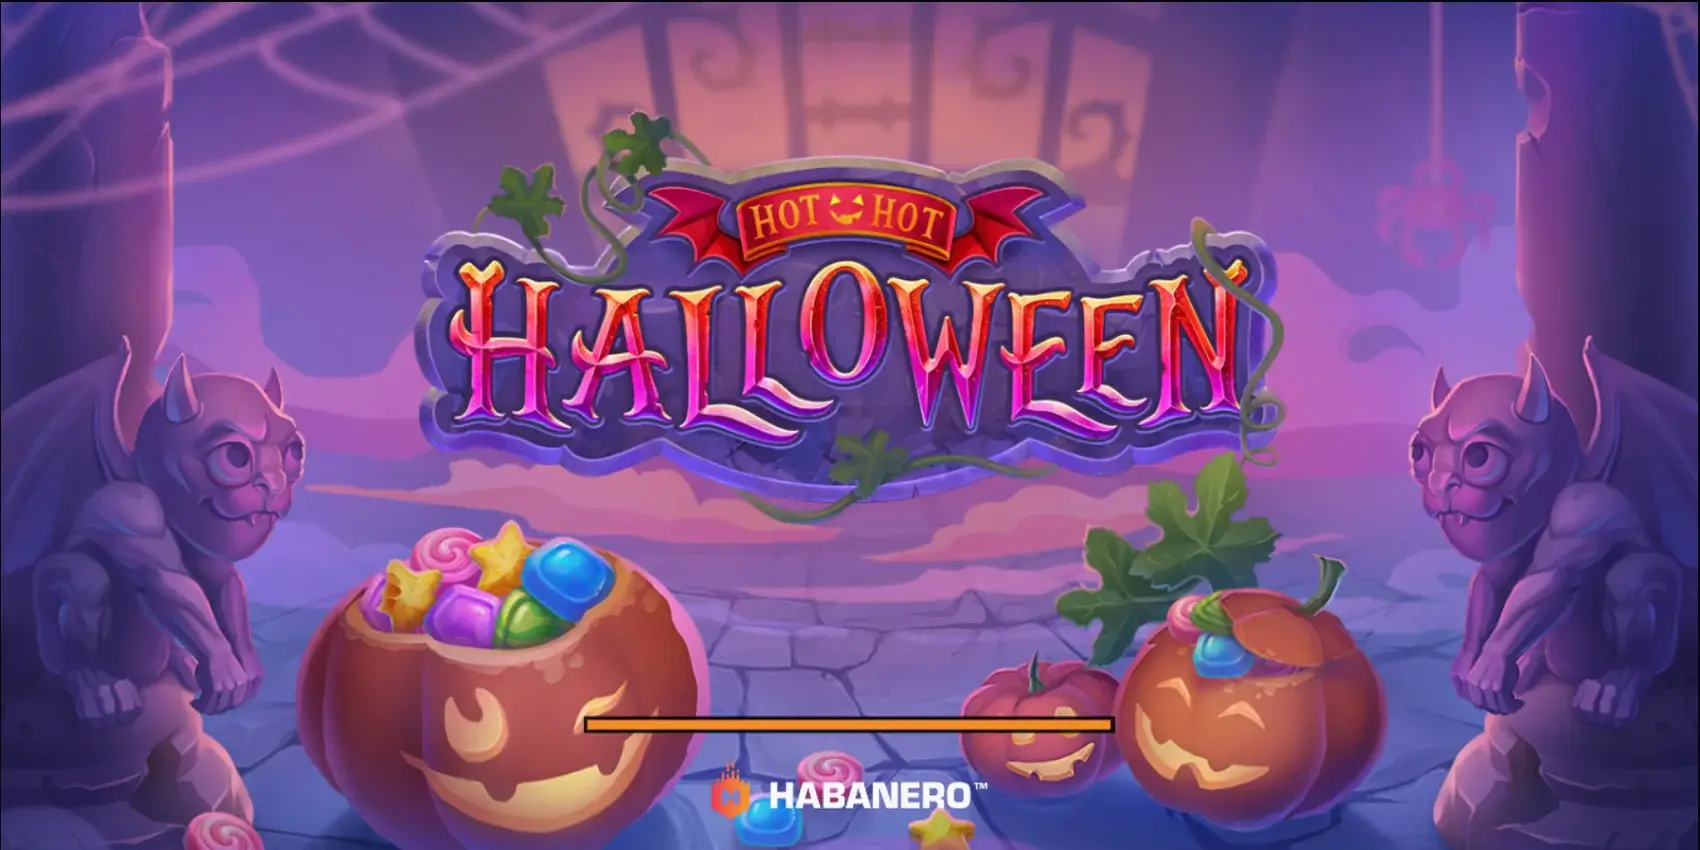 Hot Hot Halloween slot by Habanero